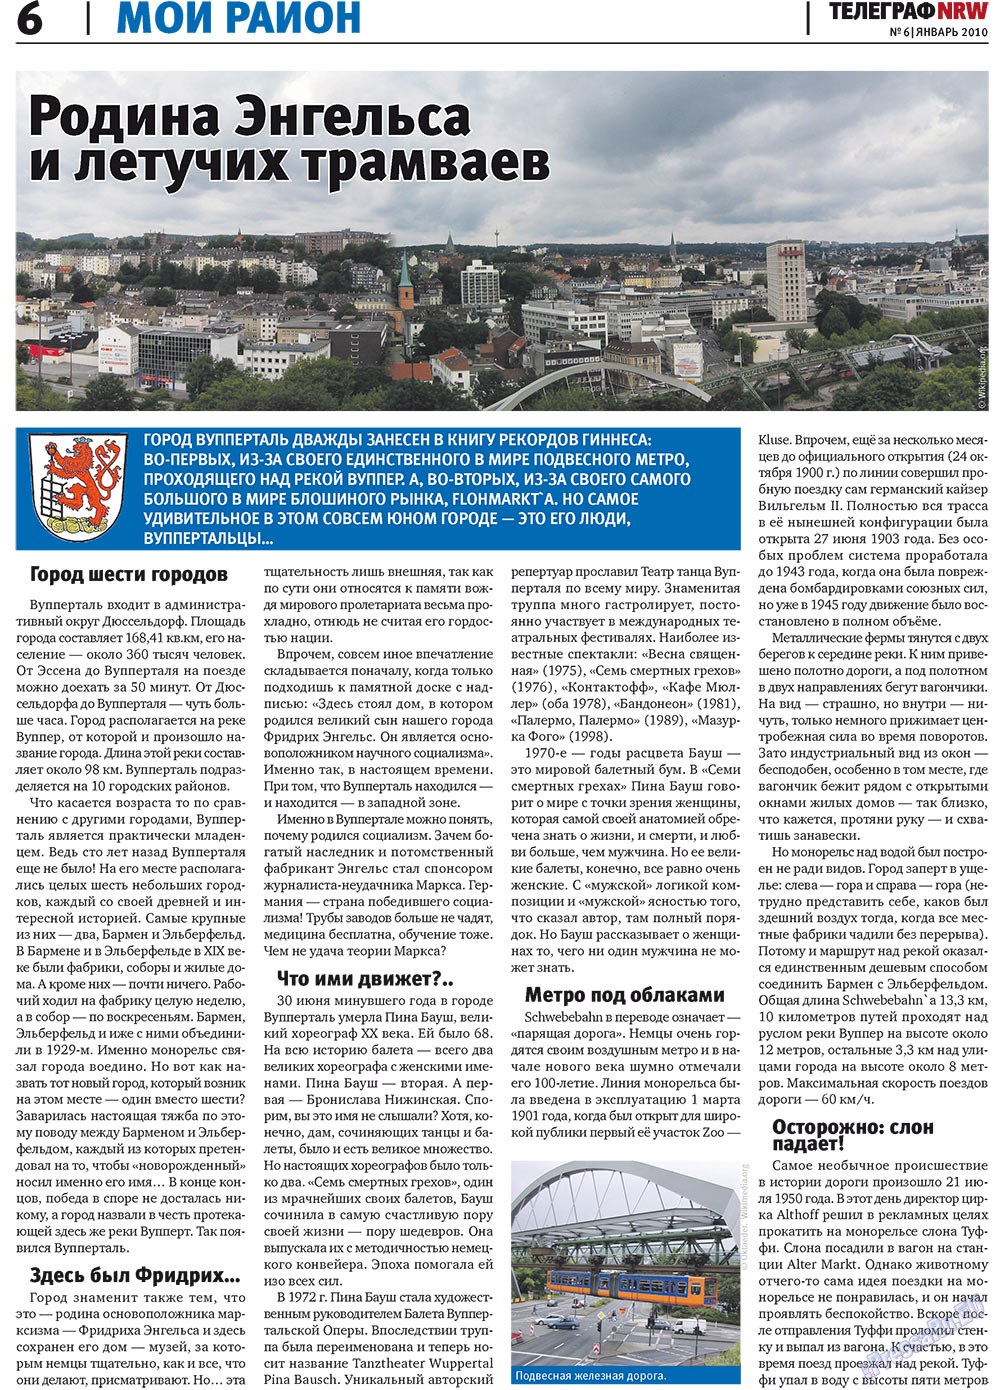 Телеграф NRW, газета. 2010 №1 стр.6